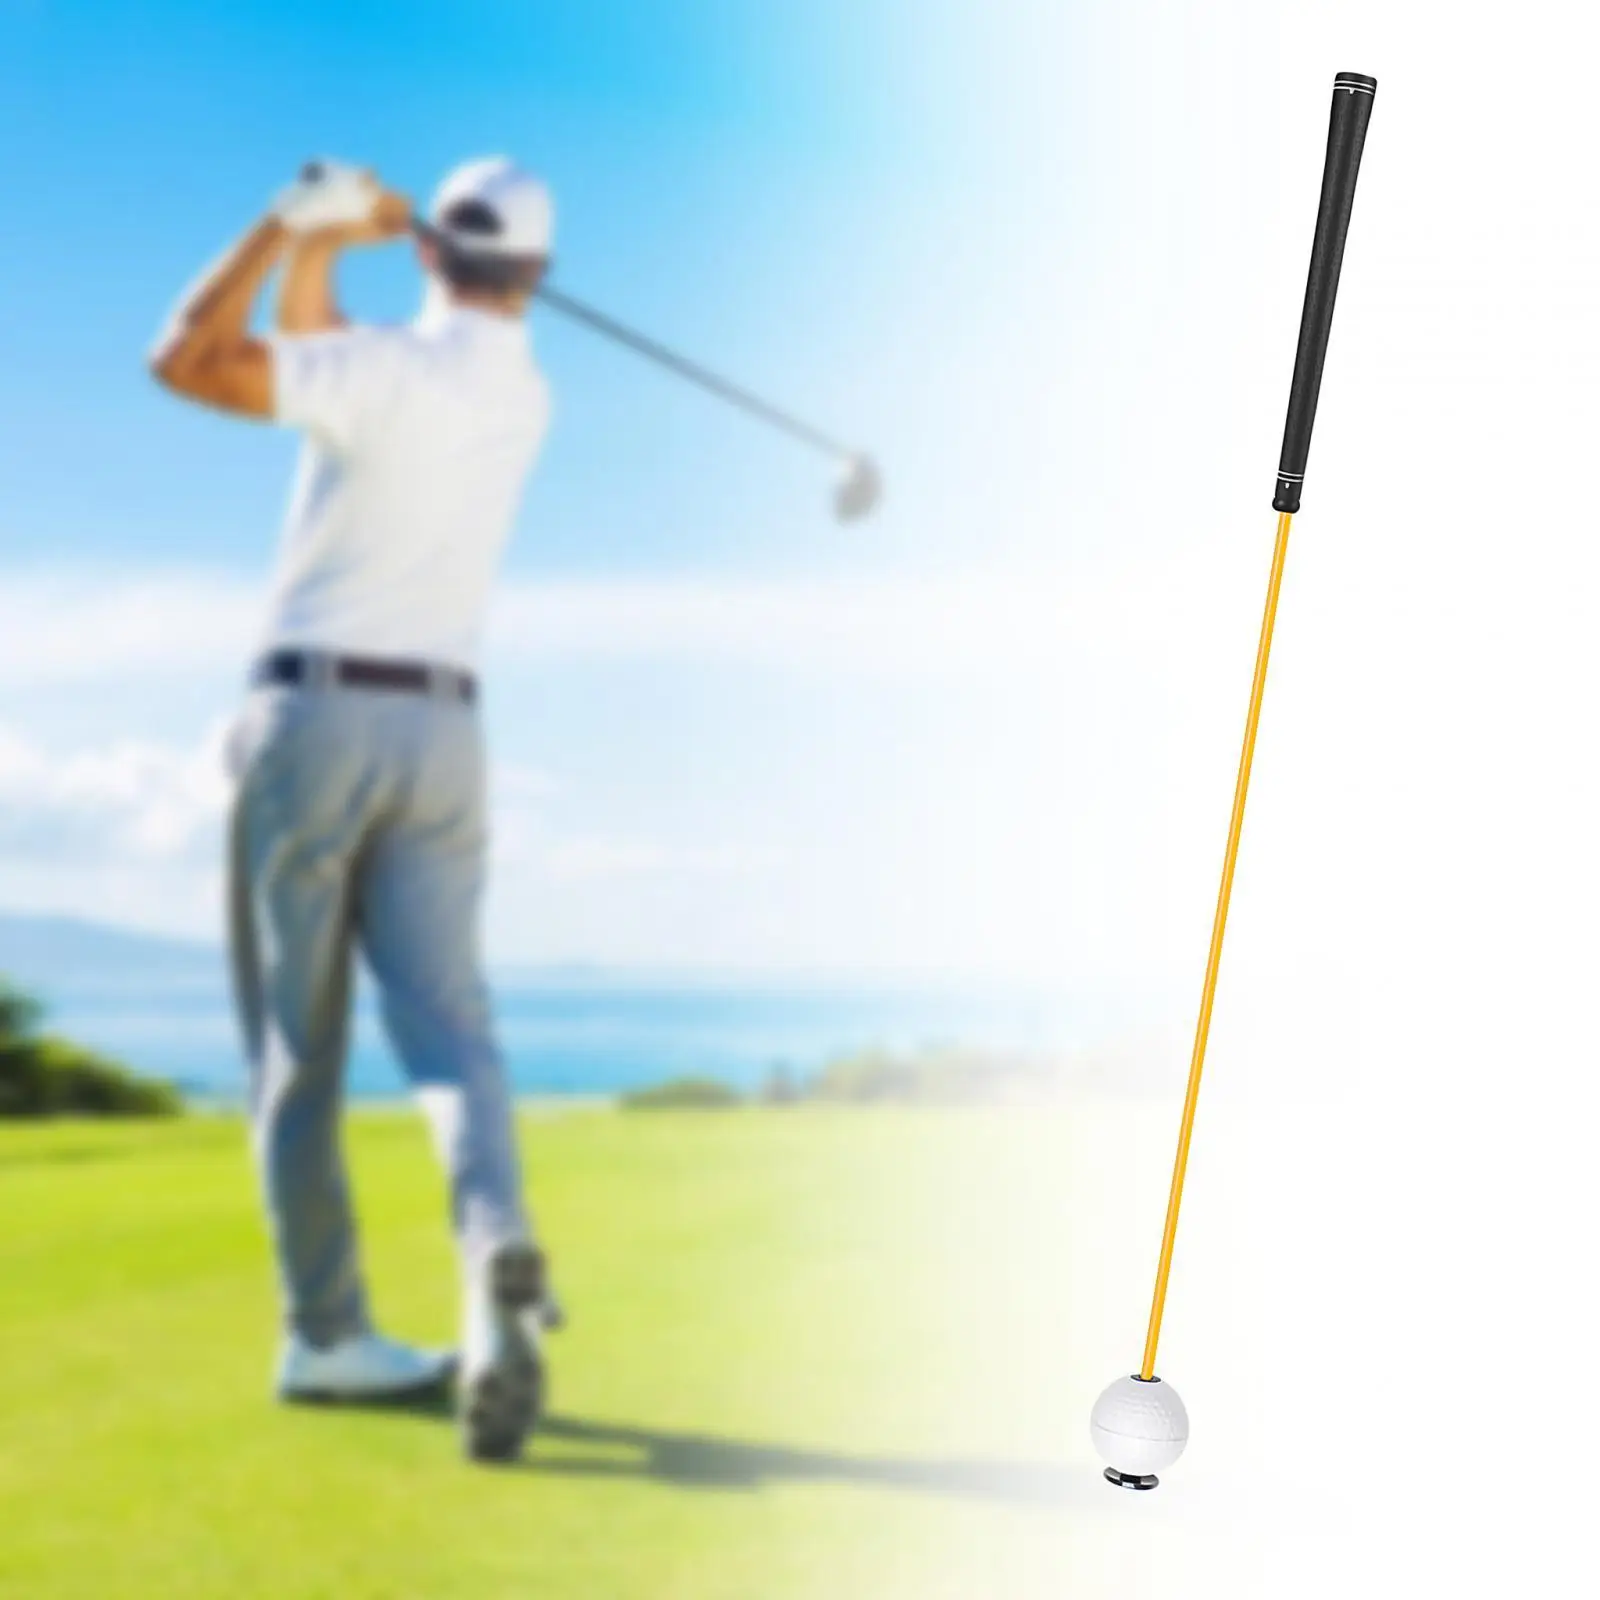 Golf Swing Trainer Nonslip Grip Warm up Club Golf Swing Training Aid for Strength Flexibility Tempo Rhythm Accessories